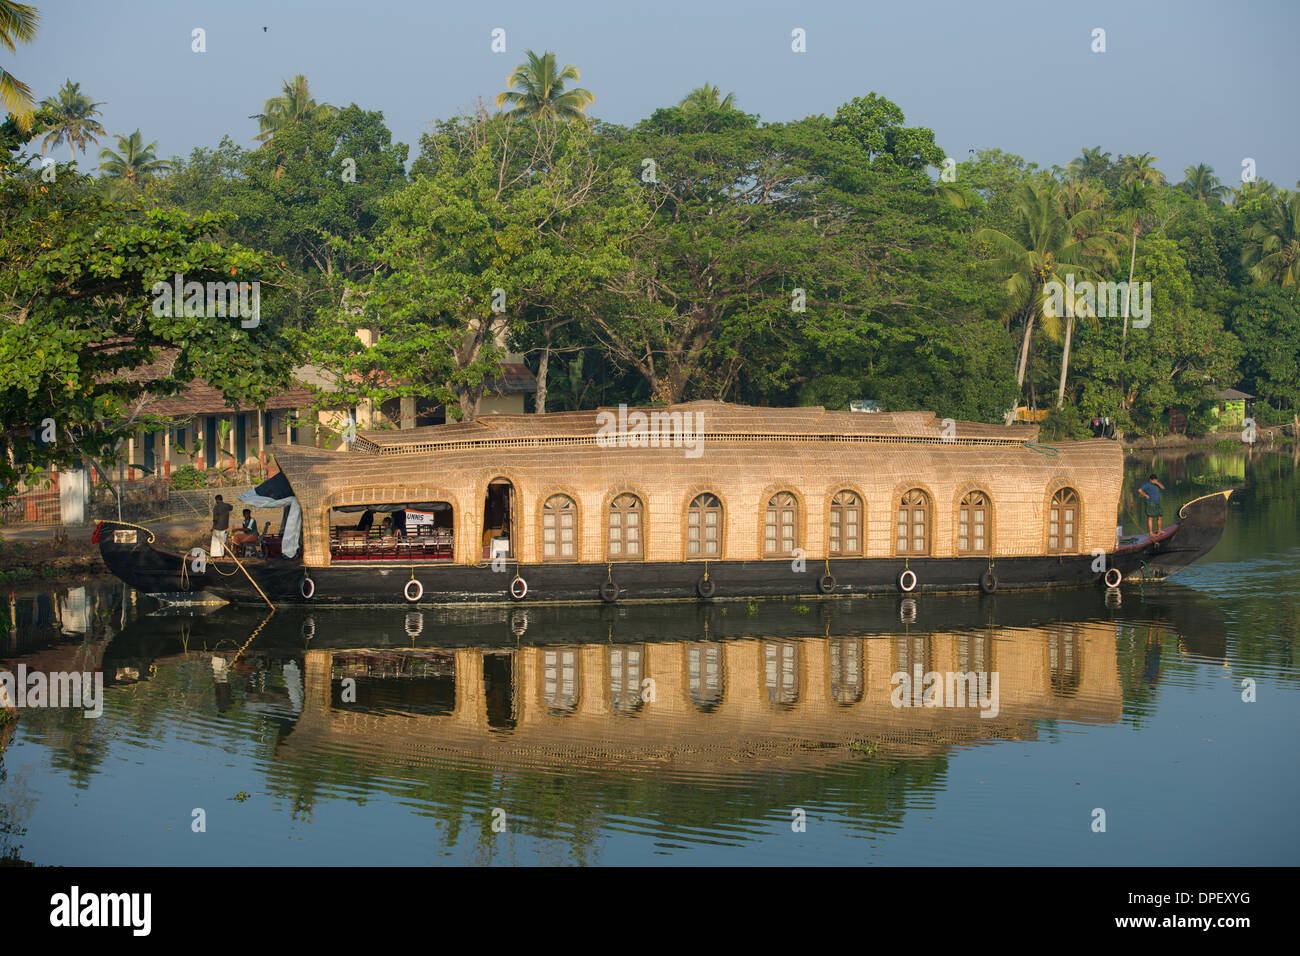 Appartamenti keralesi chiatta da riso houseboat (Kettuvallams) riflesso in una via navigabile a Kumarakom, Kottayam Kerala, India Foto Stock